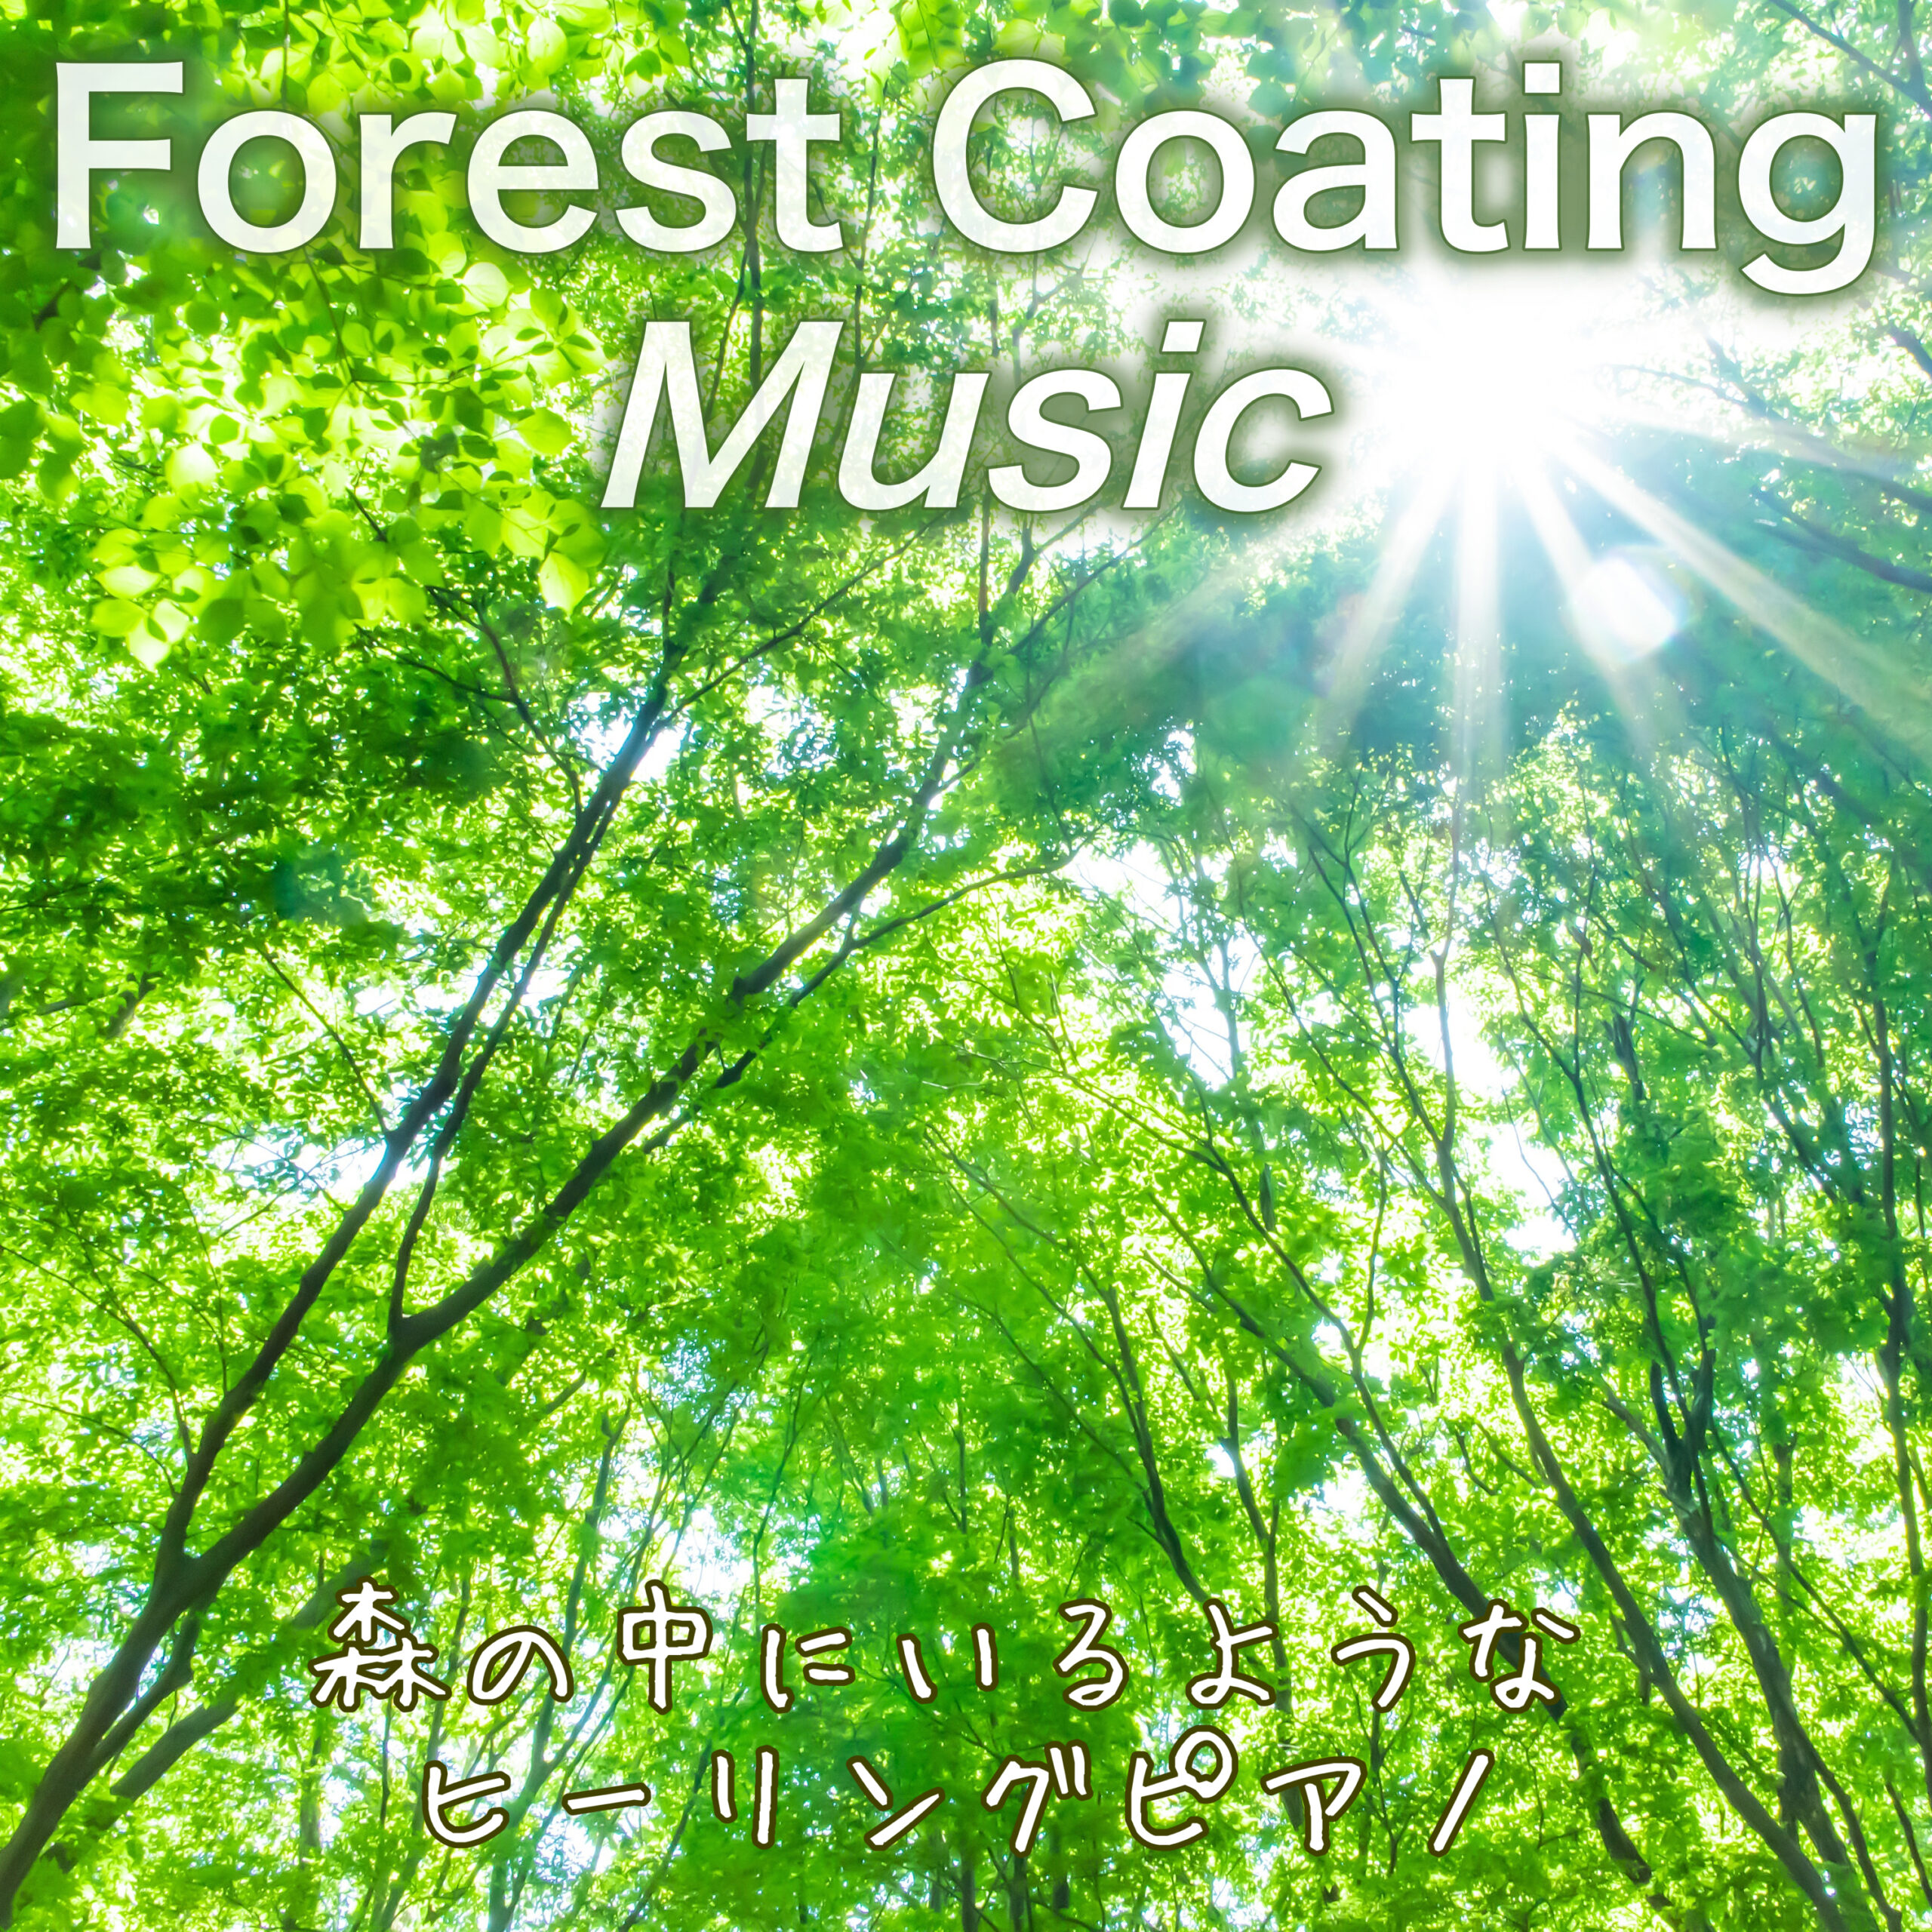 Forest Coating Music 森の中にいるようなヒーリングピアノ 朝カフェ、作業用、テレワーク用、お昼寝用 森の音、川の音 ホワイトノイズASMR入り